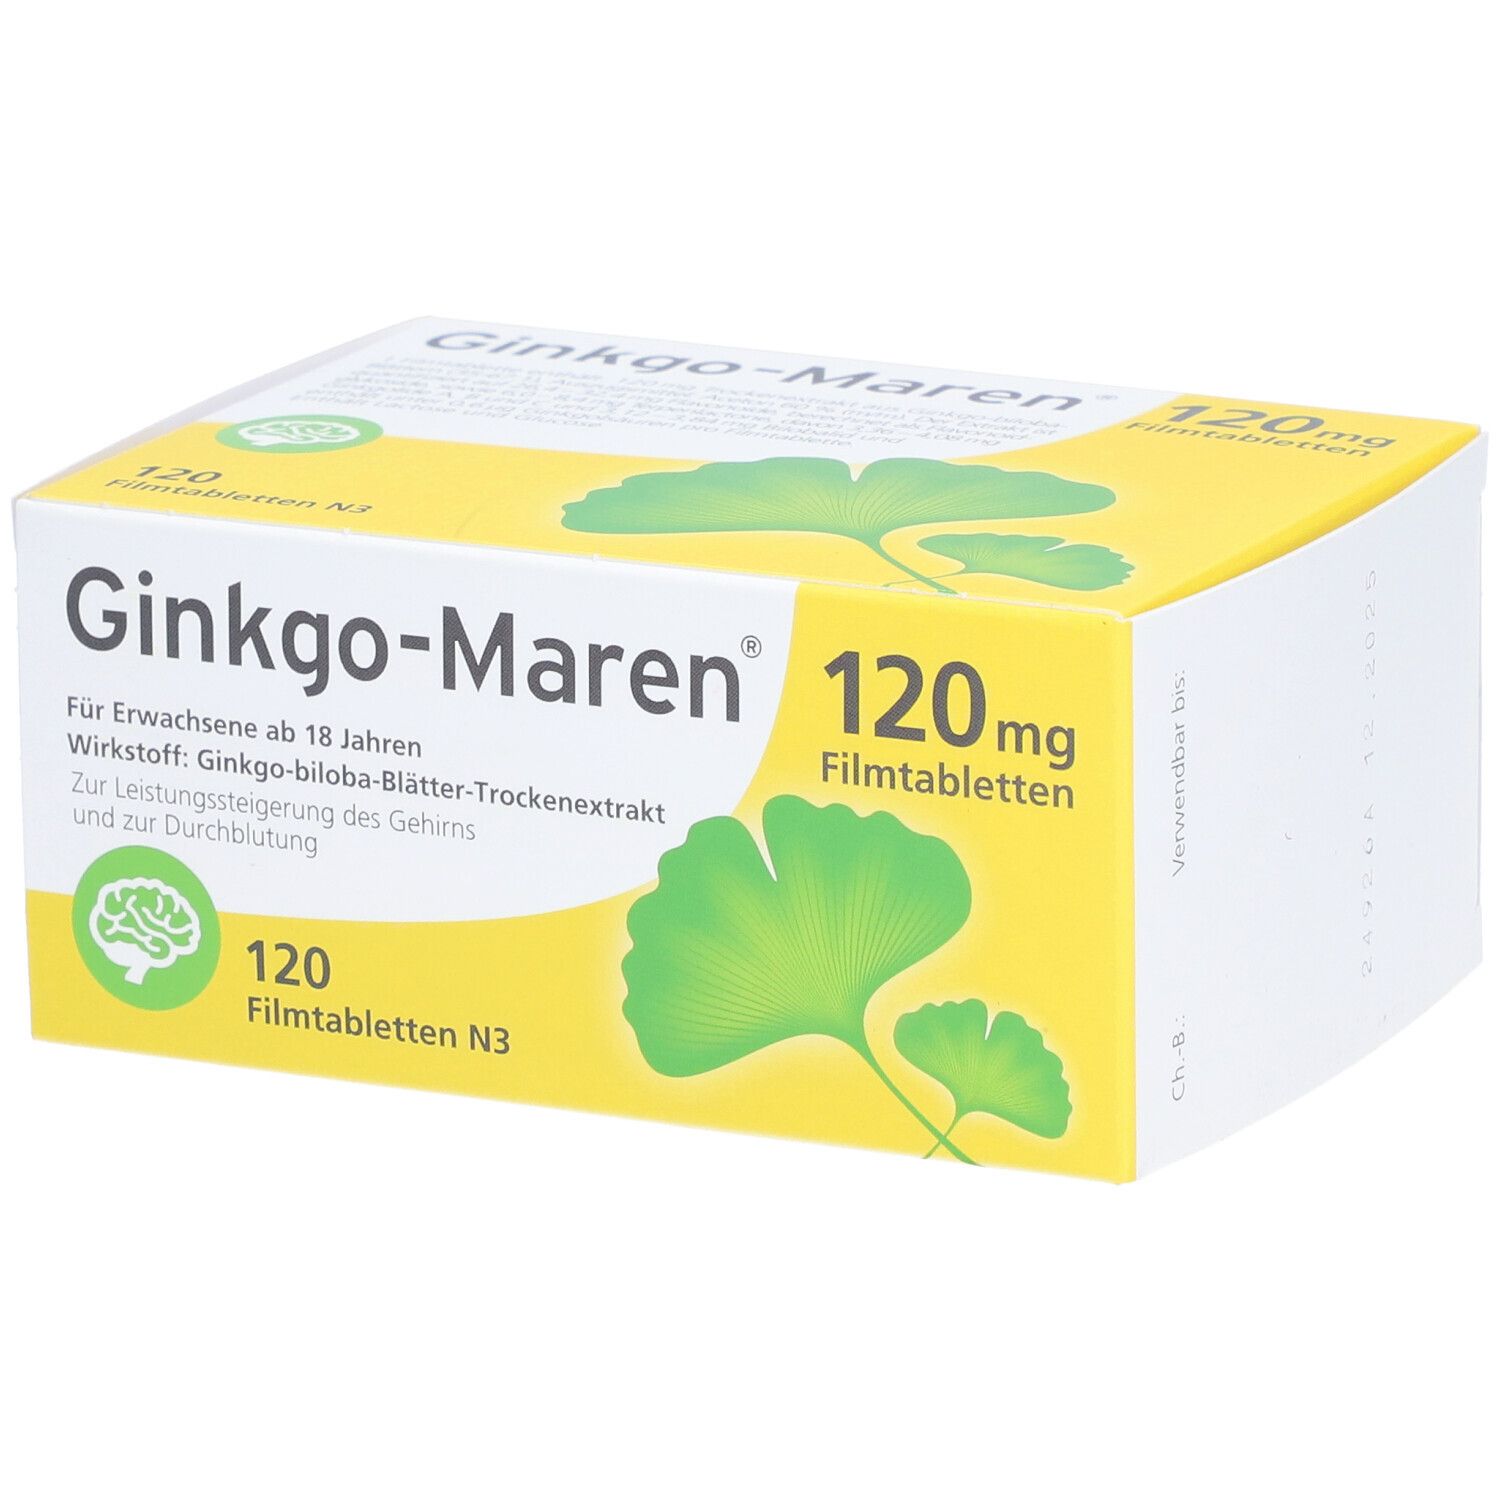 Ginkgo-Maren® 120 mg